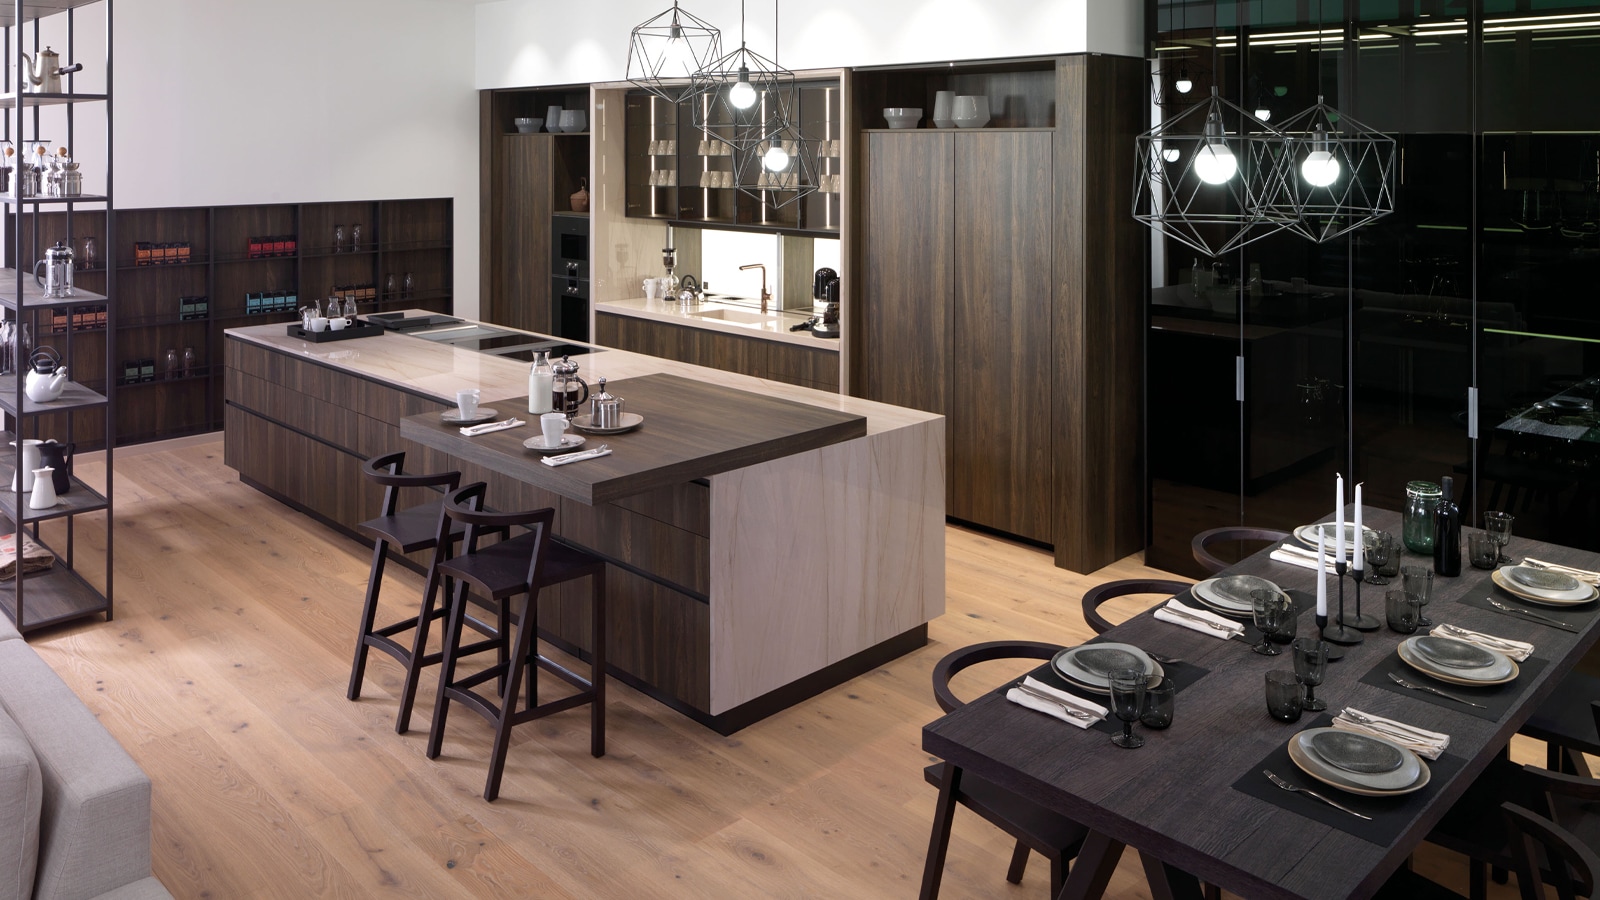 Infinite kitchens with Gamadecor's sliding worktops